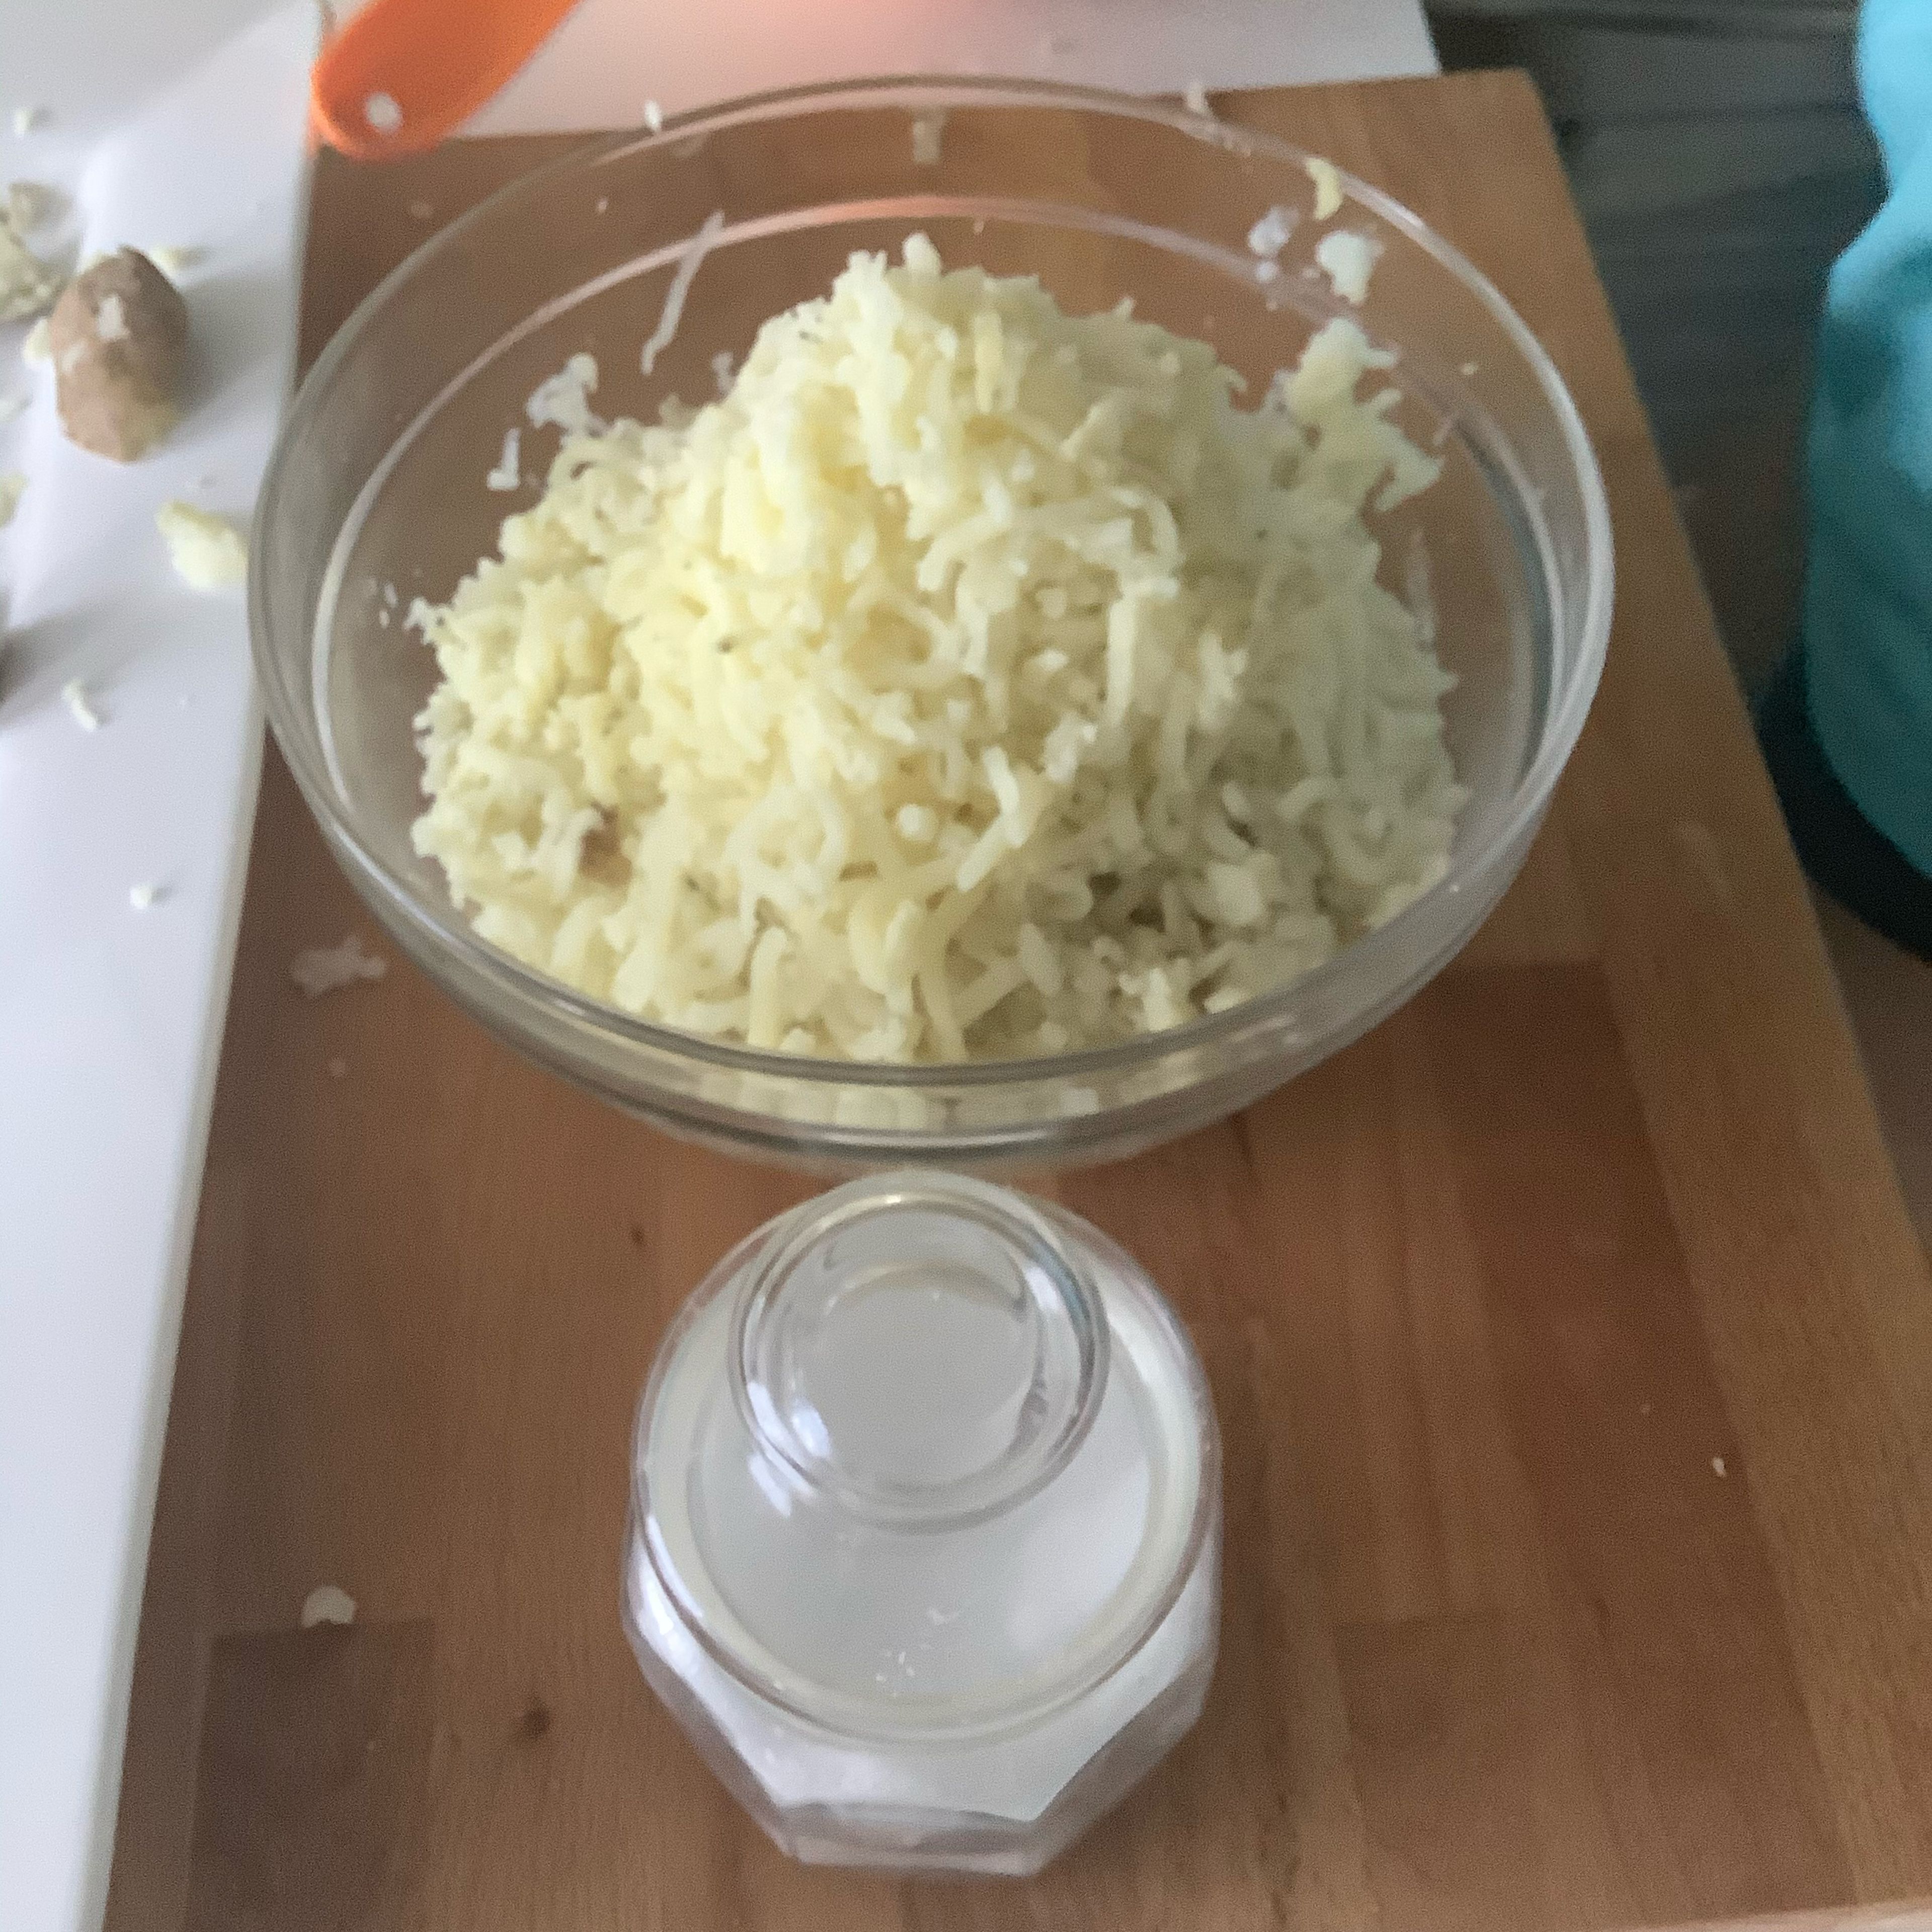 Add salt to the bowl